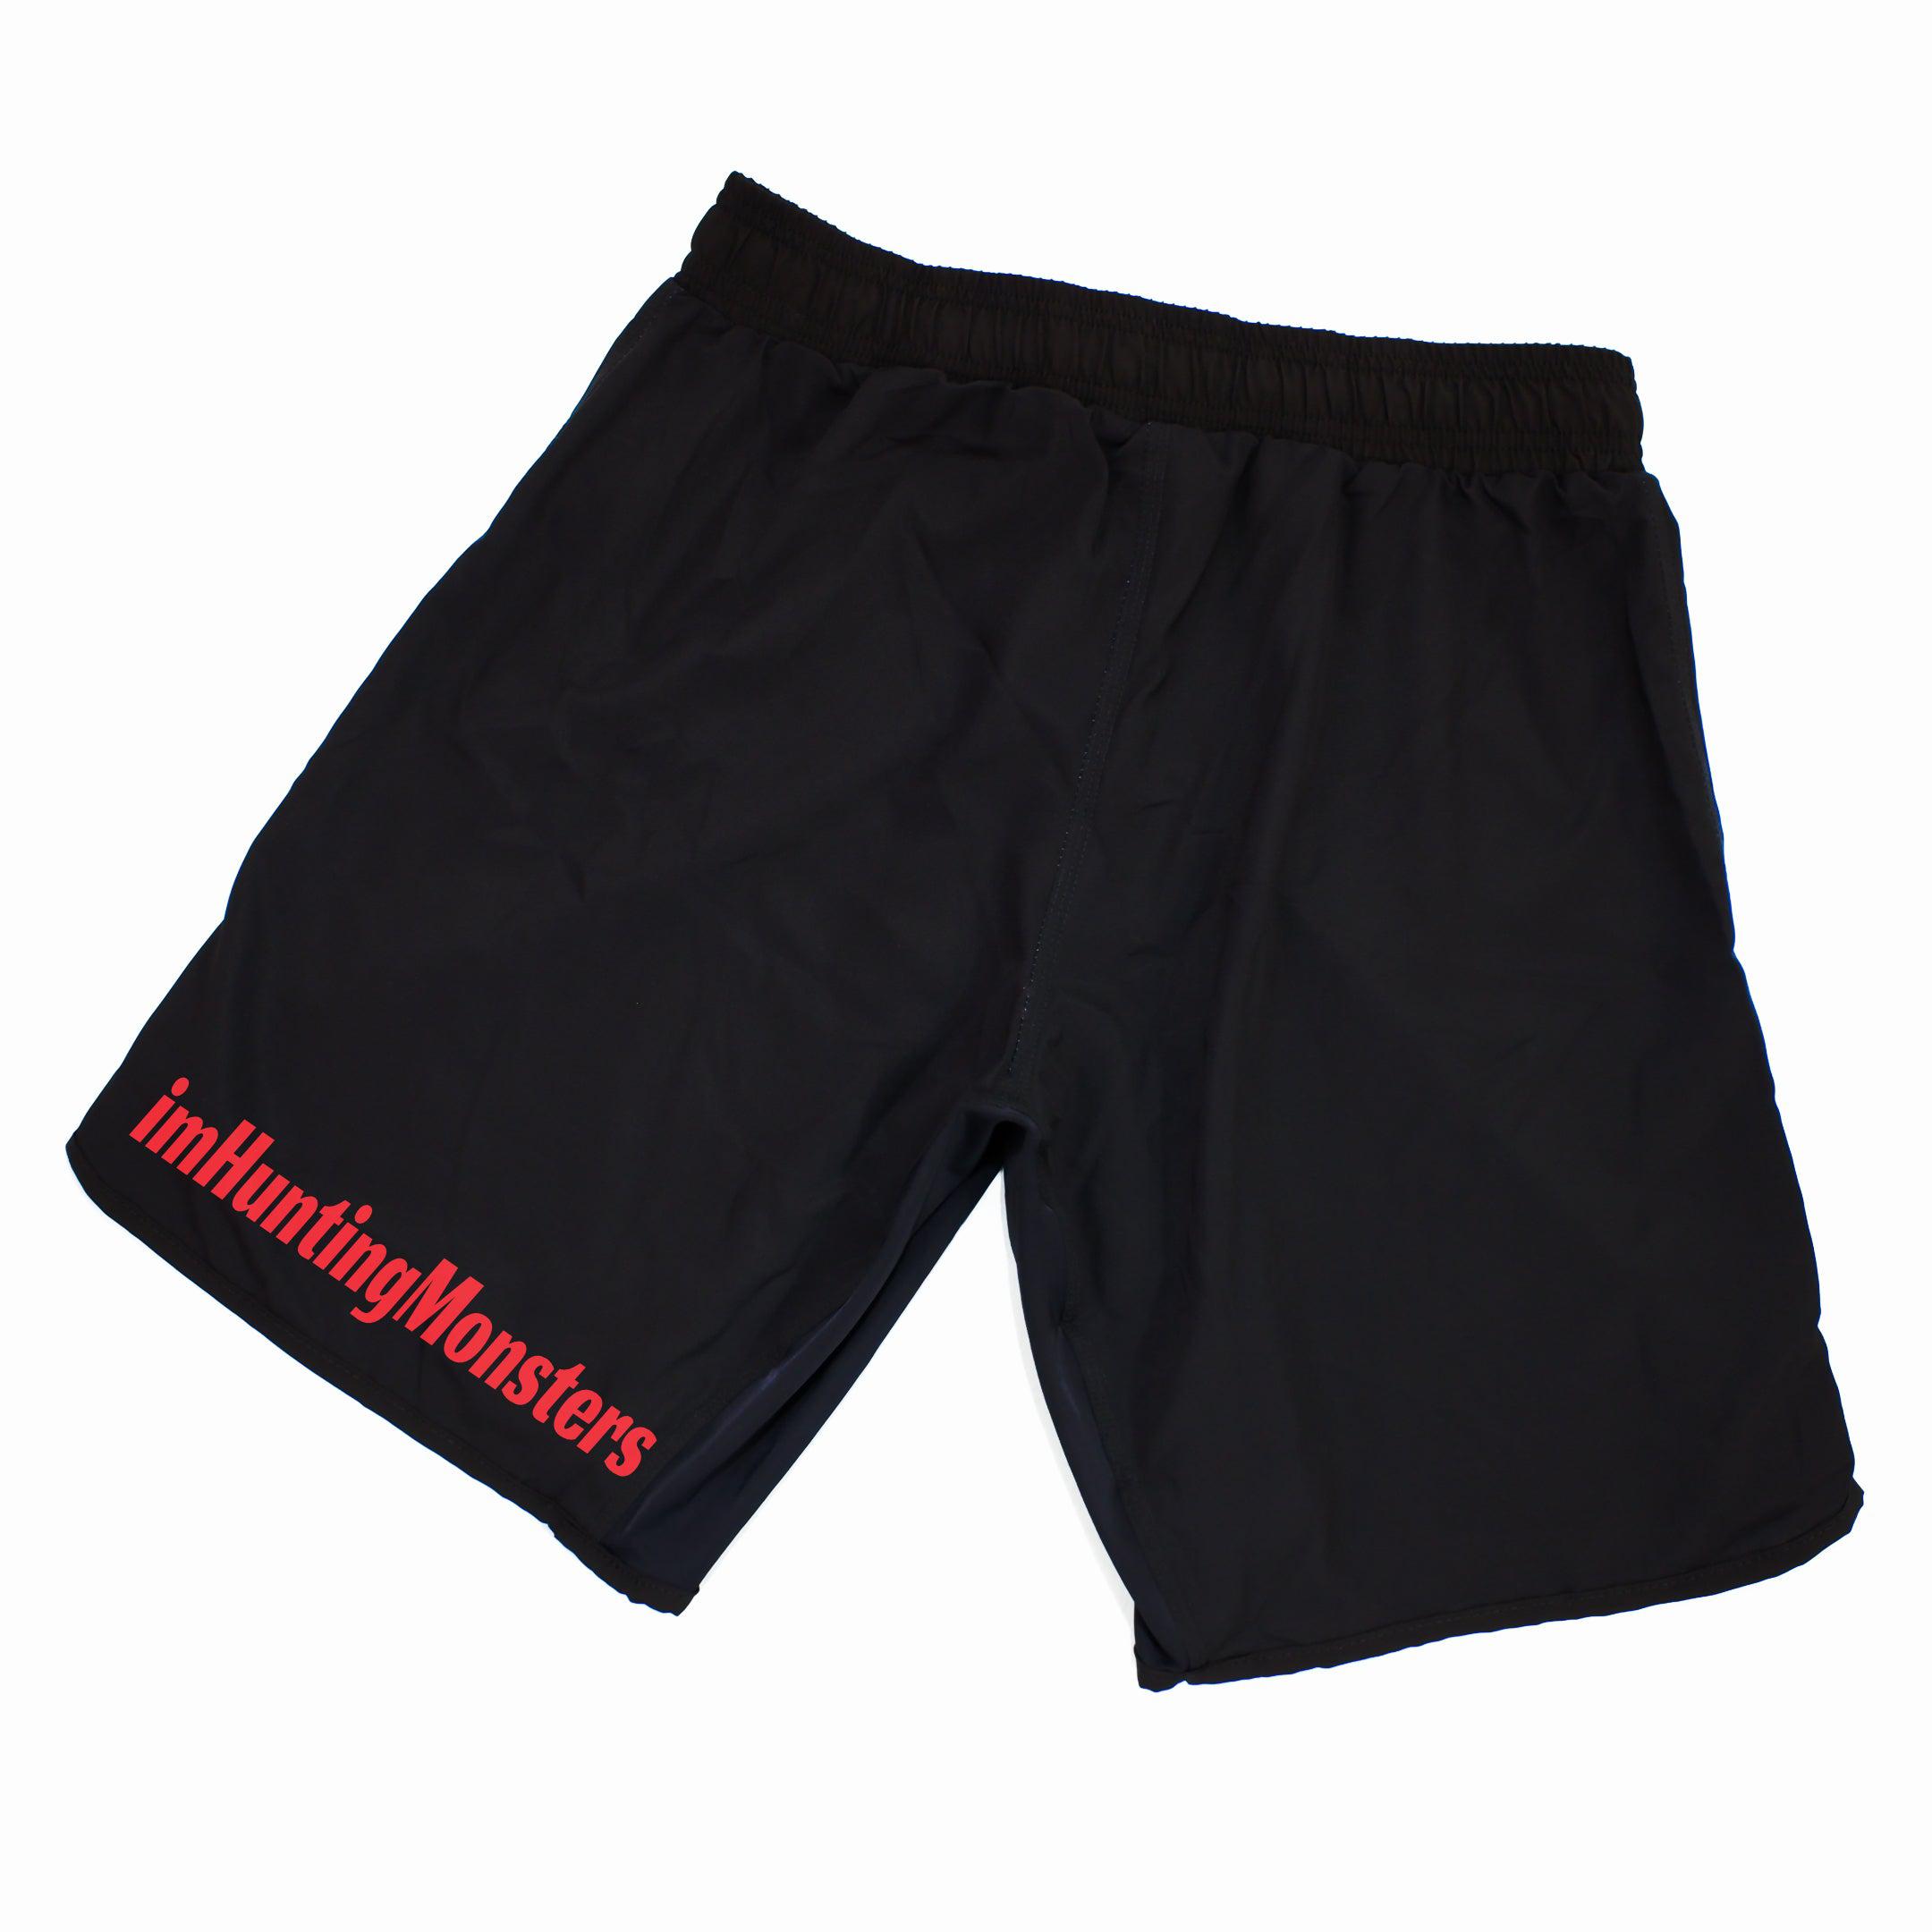 imHuntingMonsters Ranked Grappling Shorts (Black) Zenko Fightwear